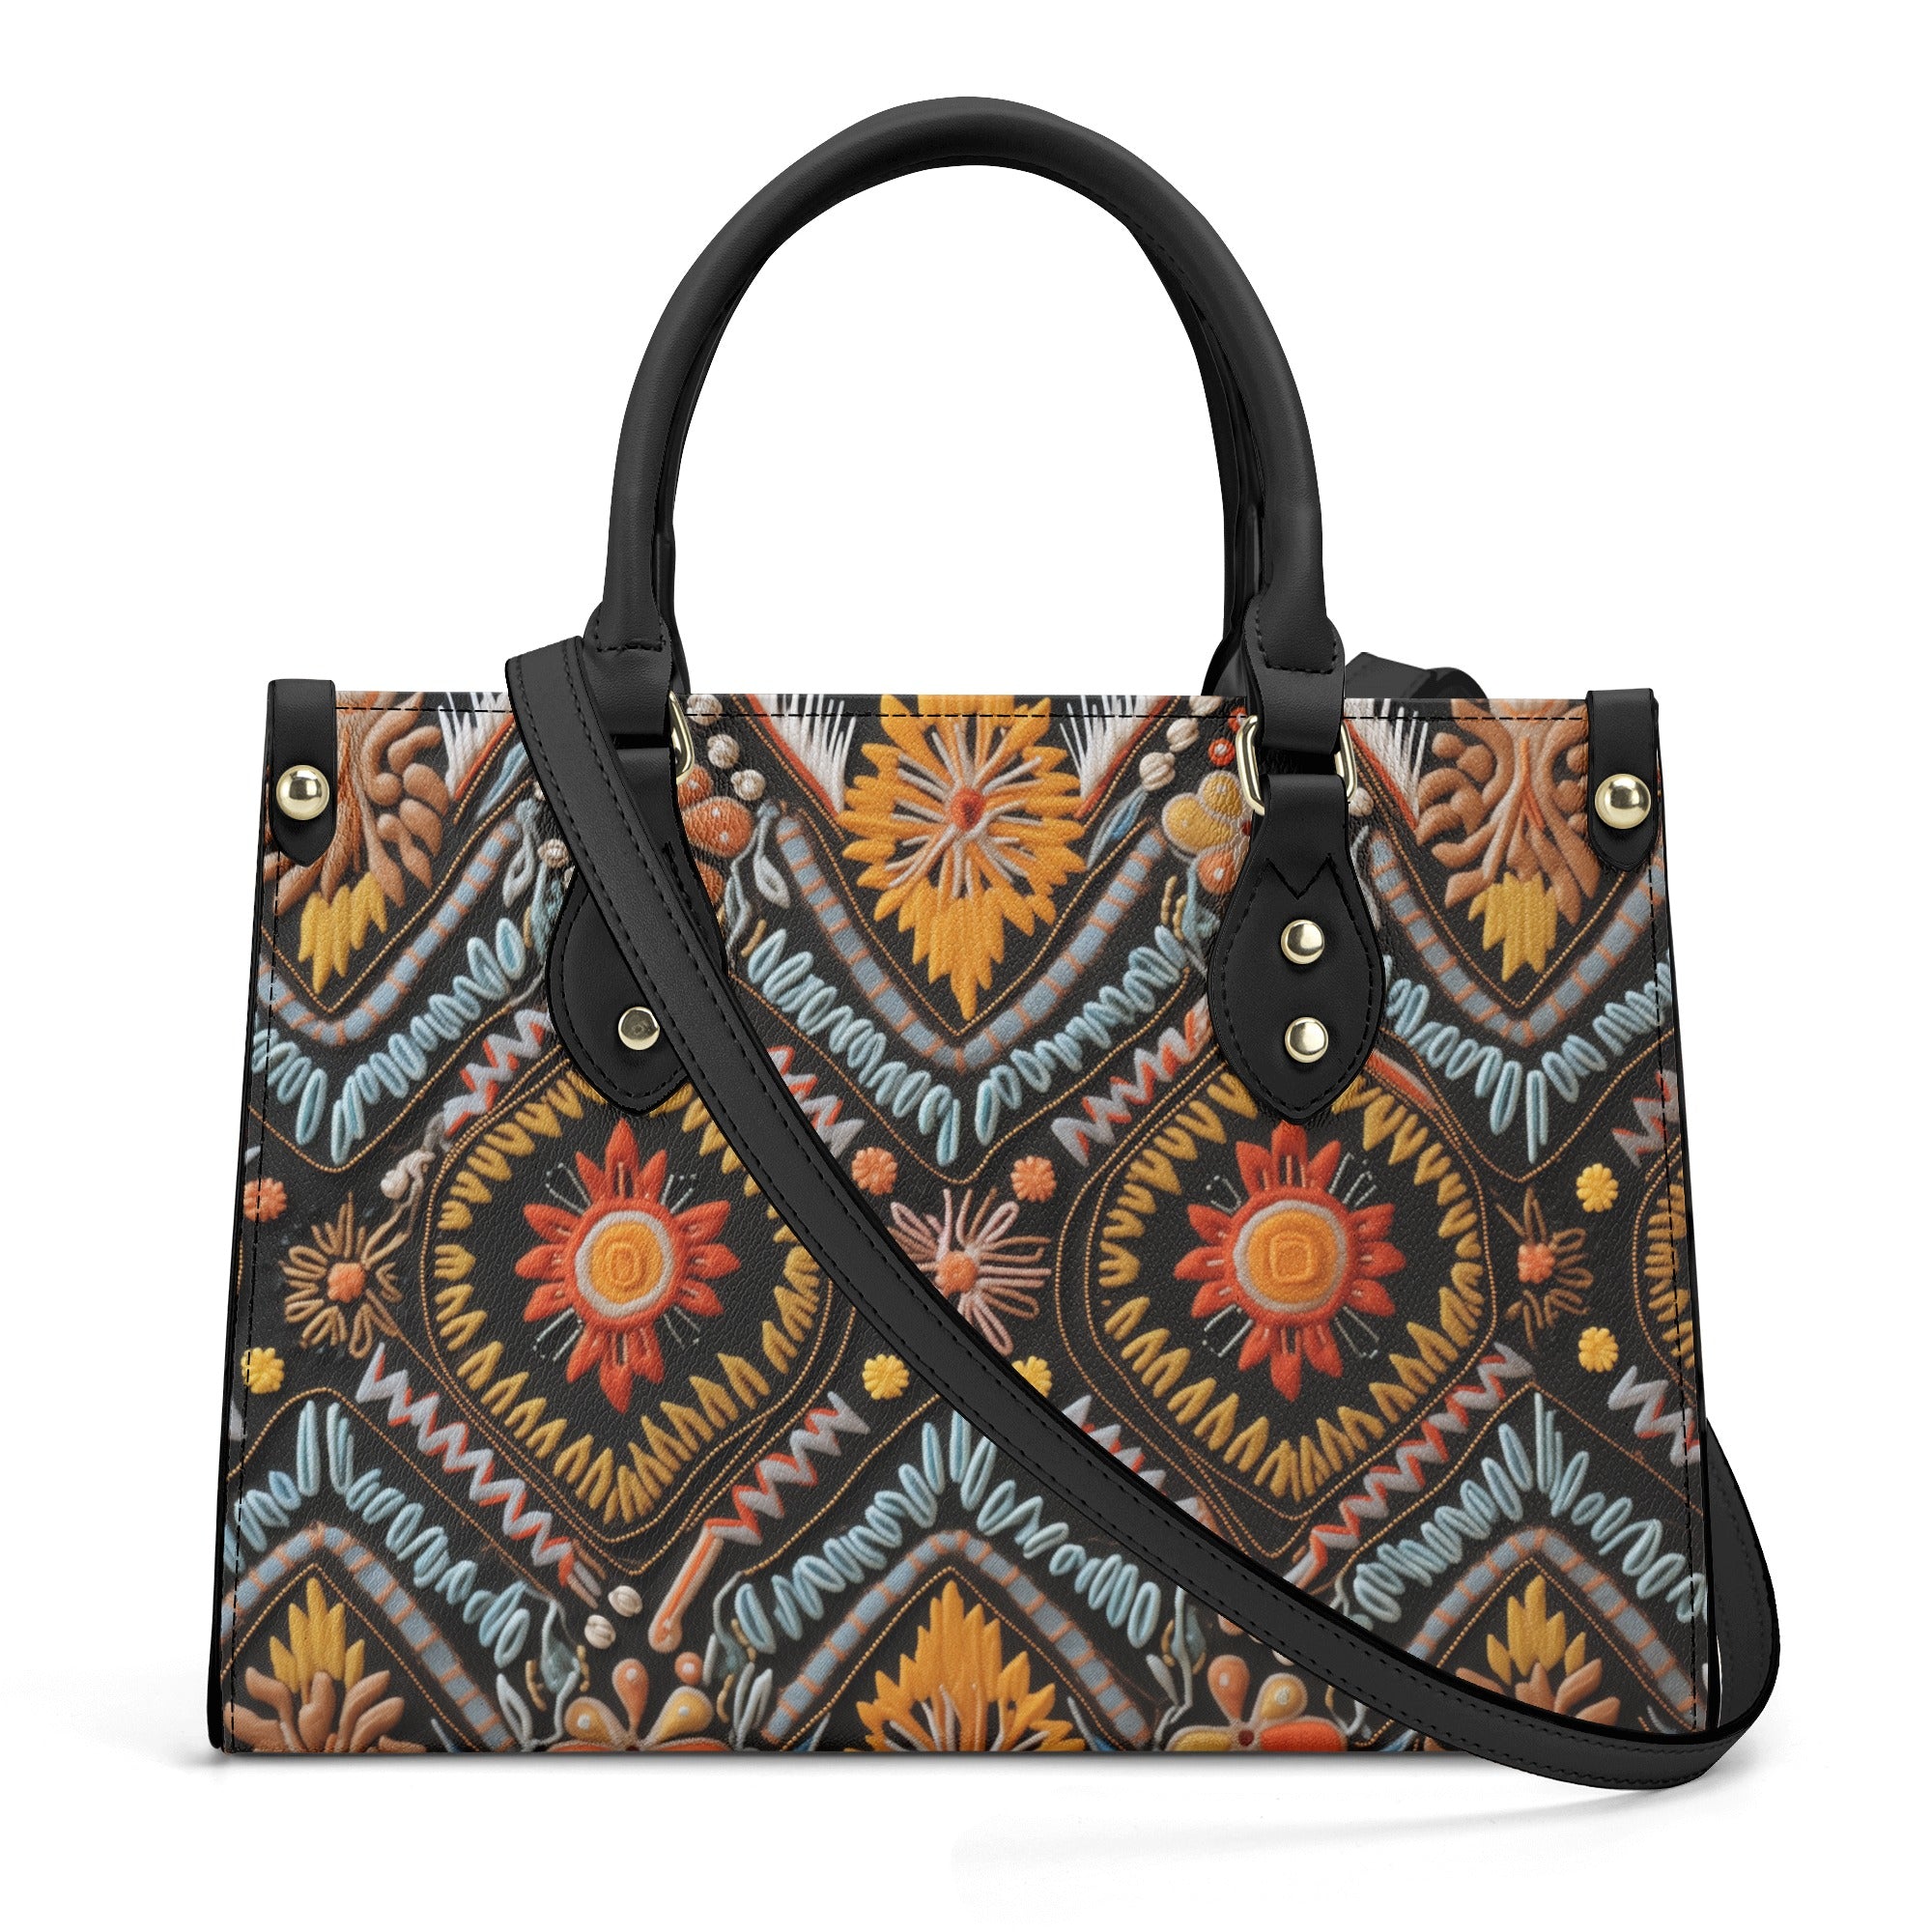 Native Embroidery Print Leather Handbag